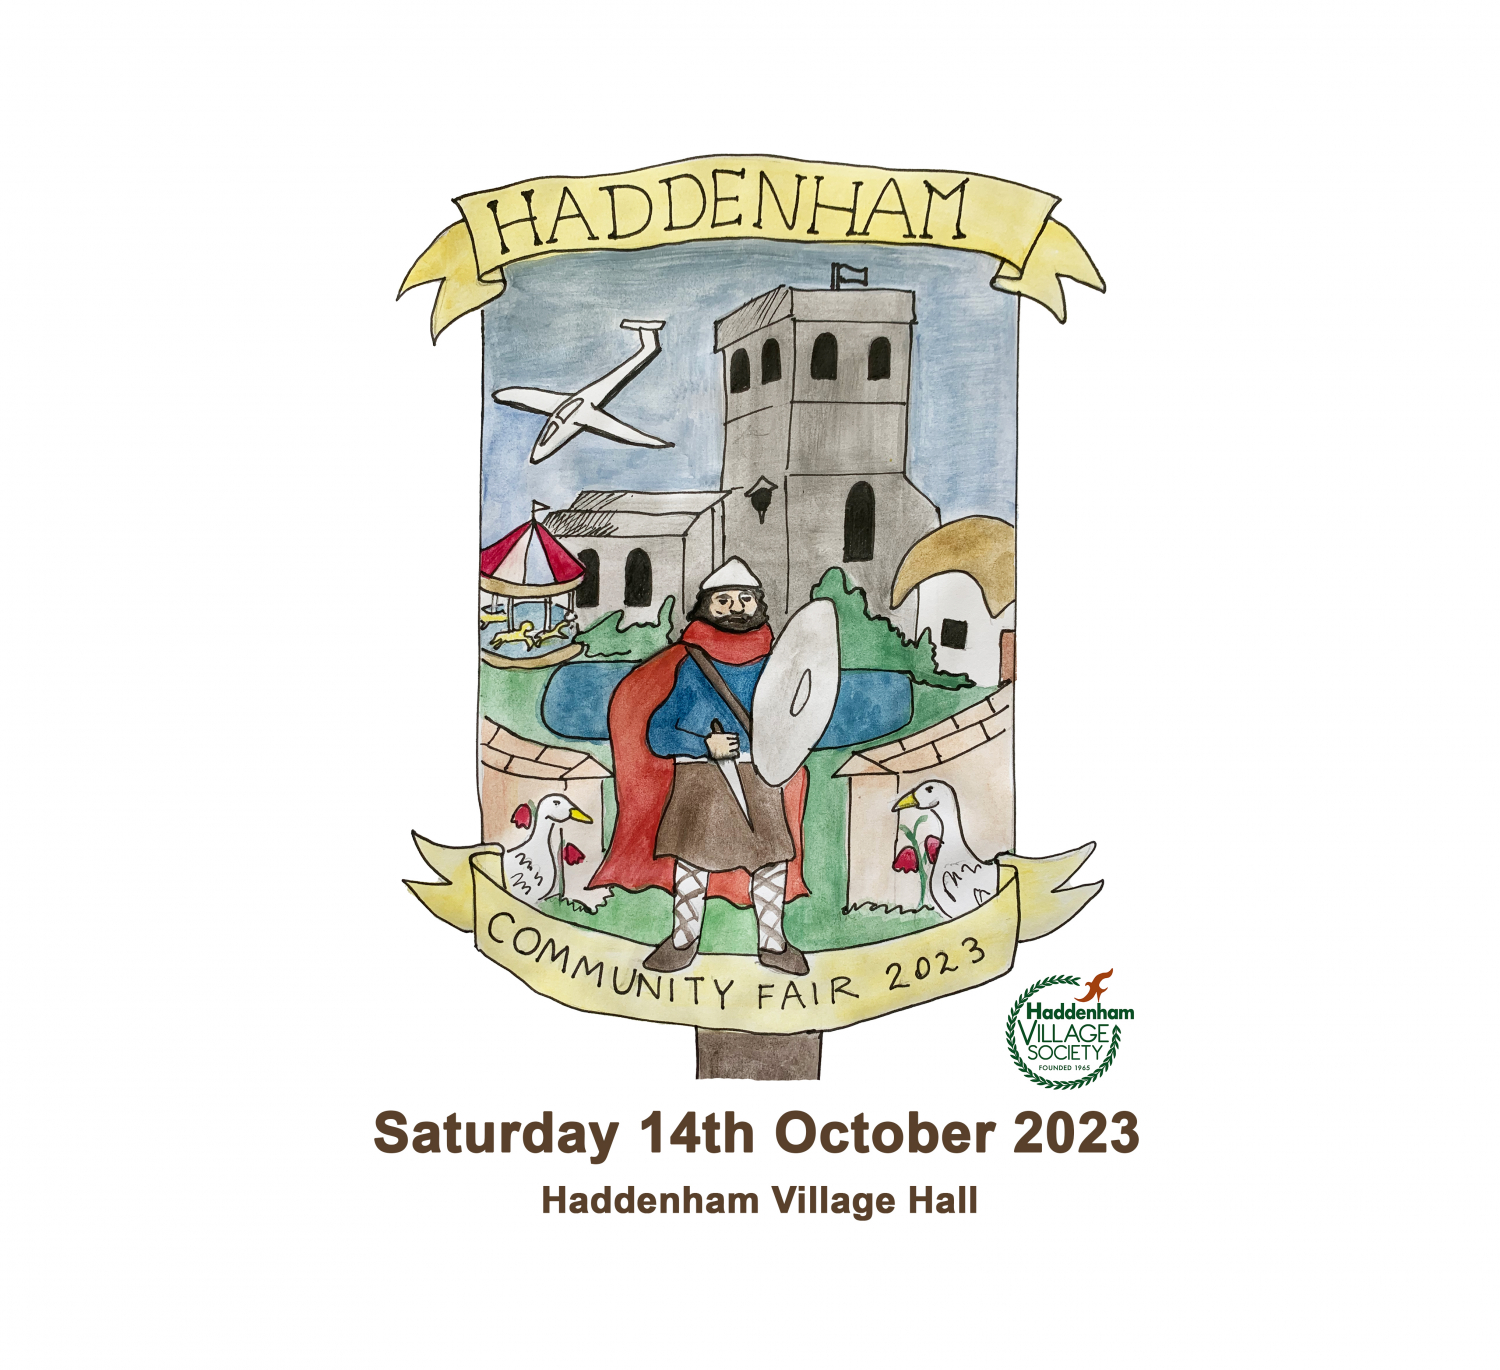 Haddenham.net | Haddenham Community Fair